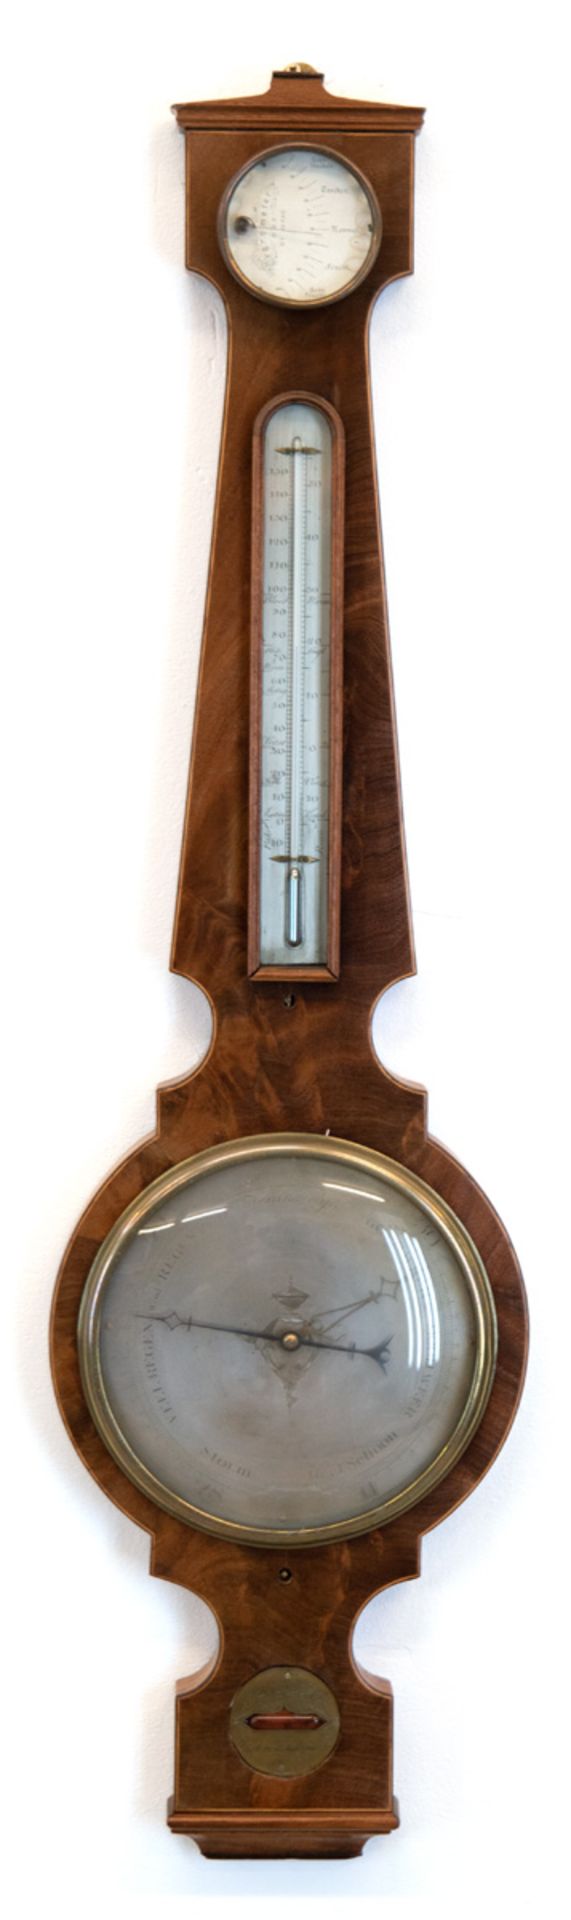 Wetterstation, Holland 19. Jh., Mahagoni, mit Hygrometer, Thermometer, Barometer undWasserwaage,